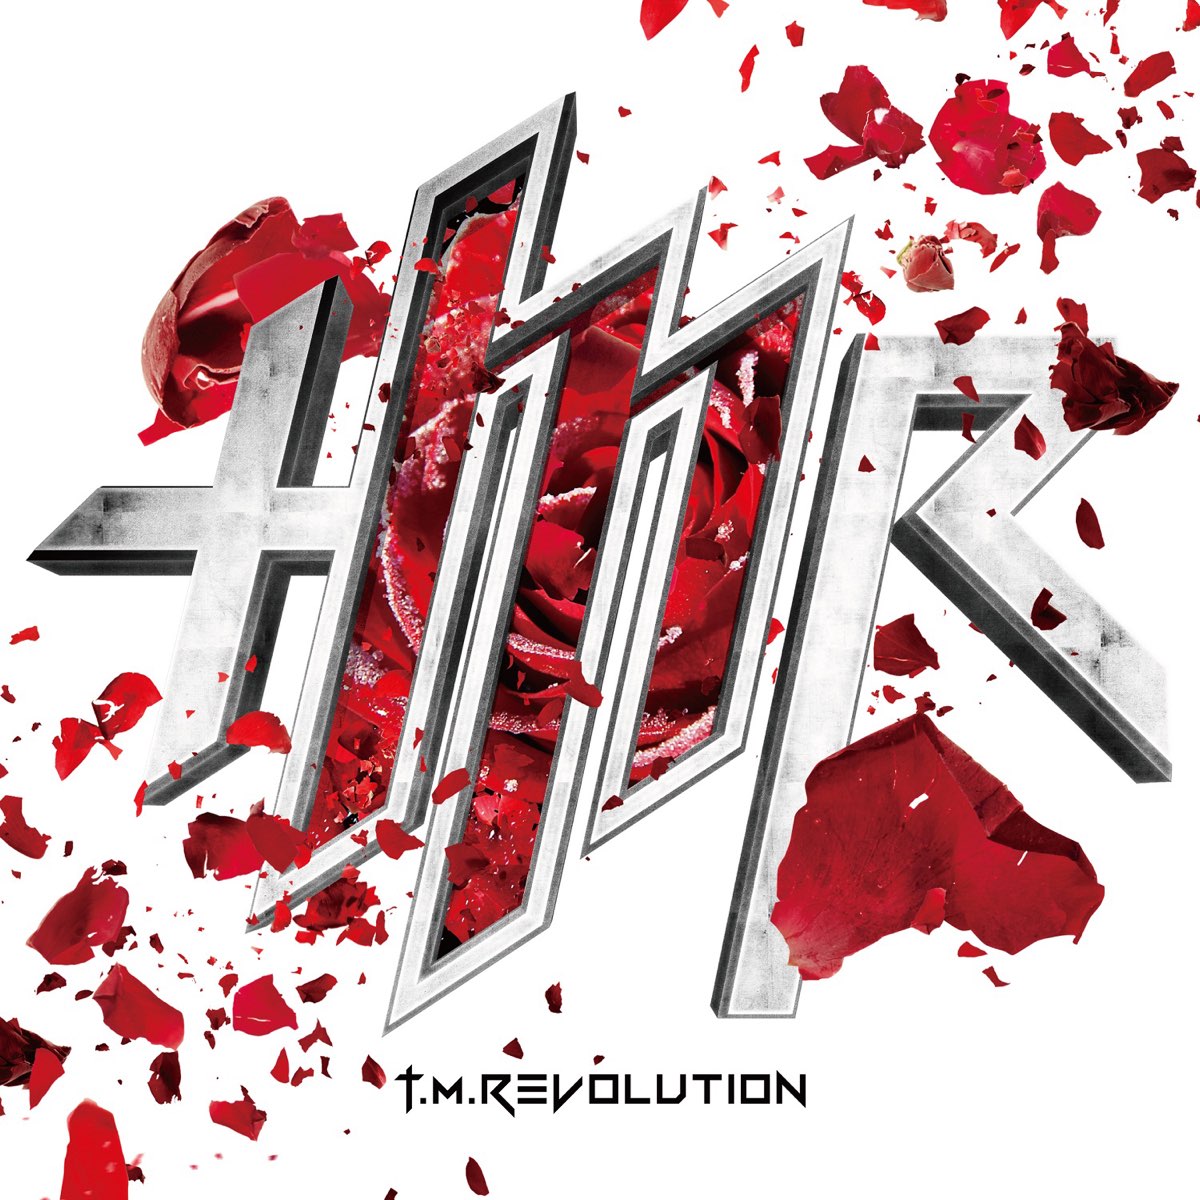 Revolution музыка. T.M.Revolution. Count Zero. CD Heart of Sword t m Revolution.